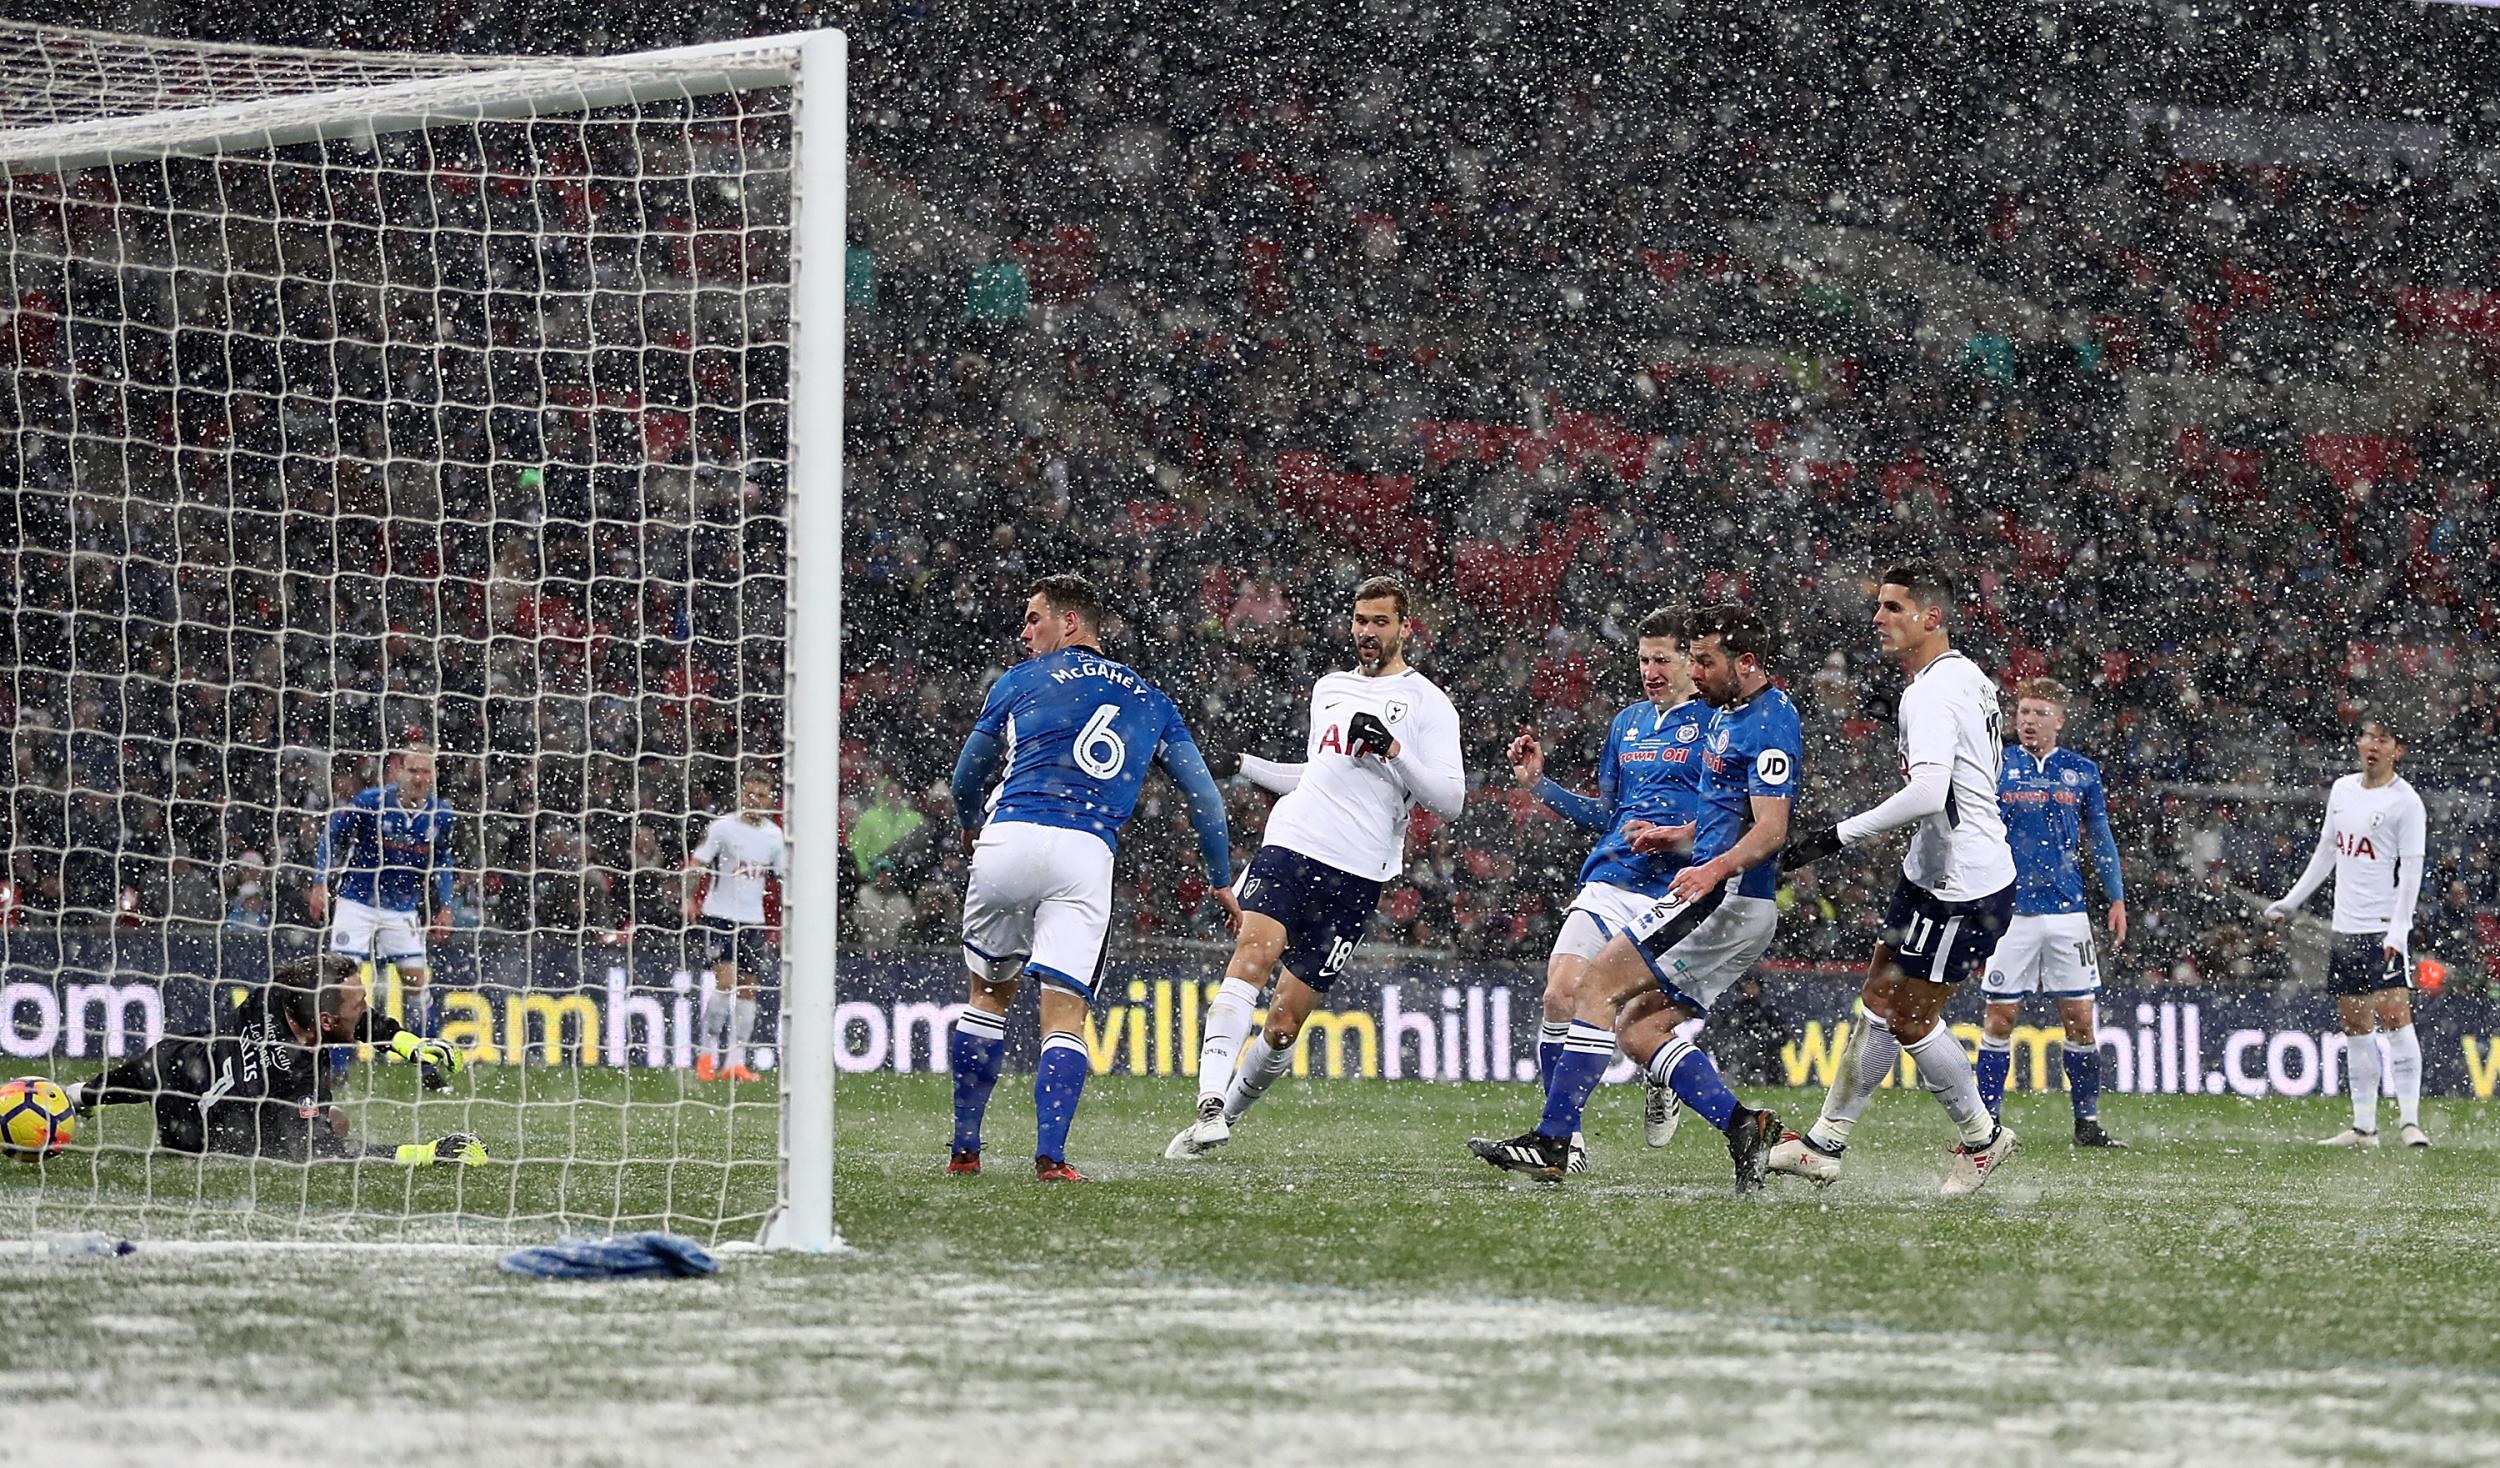 Fernando Llorente opens the scoring at a snowy Wembley